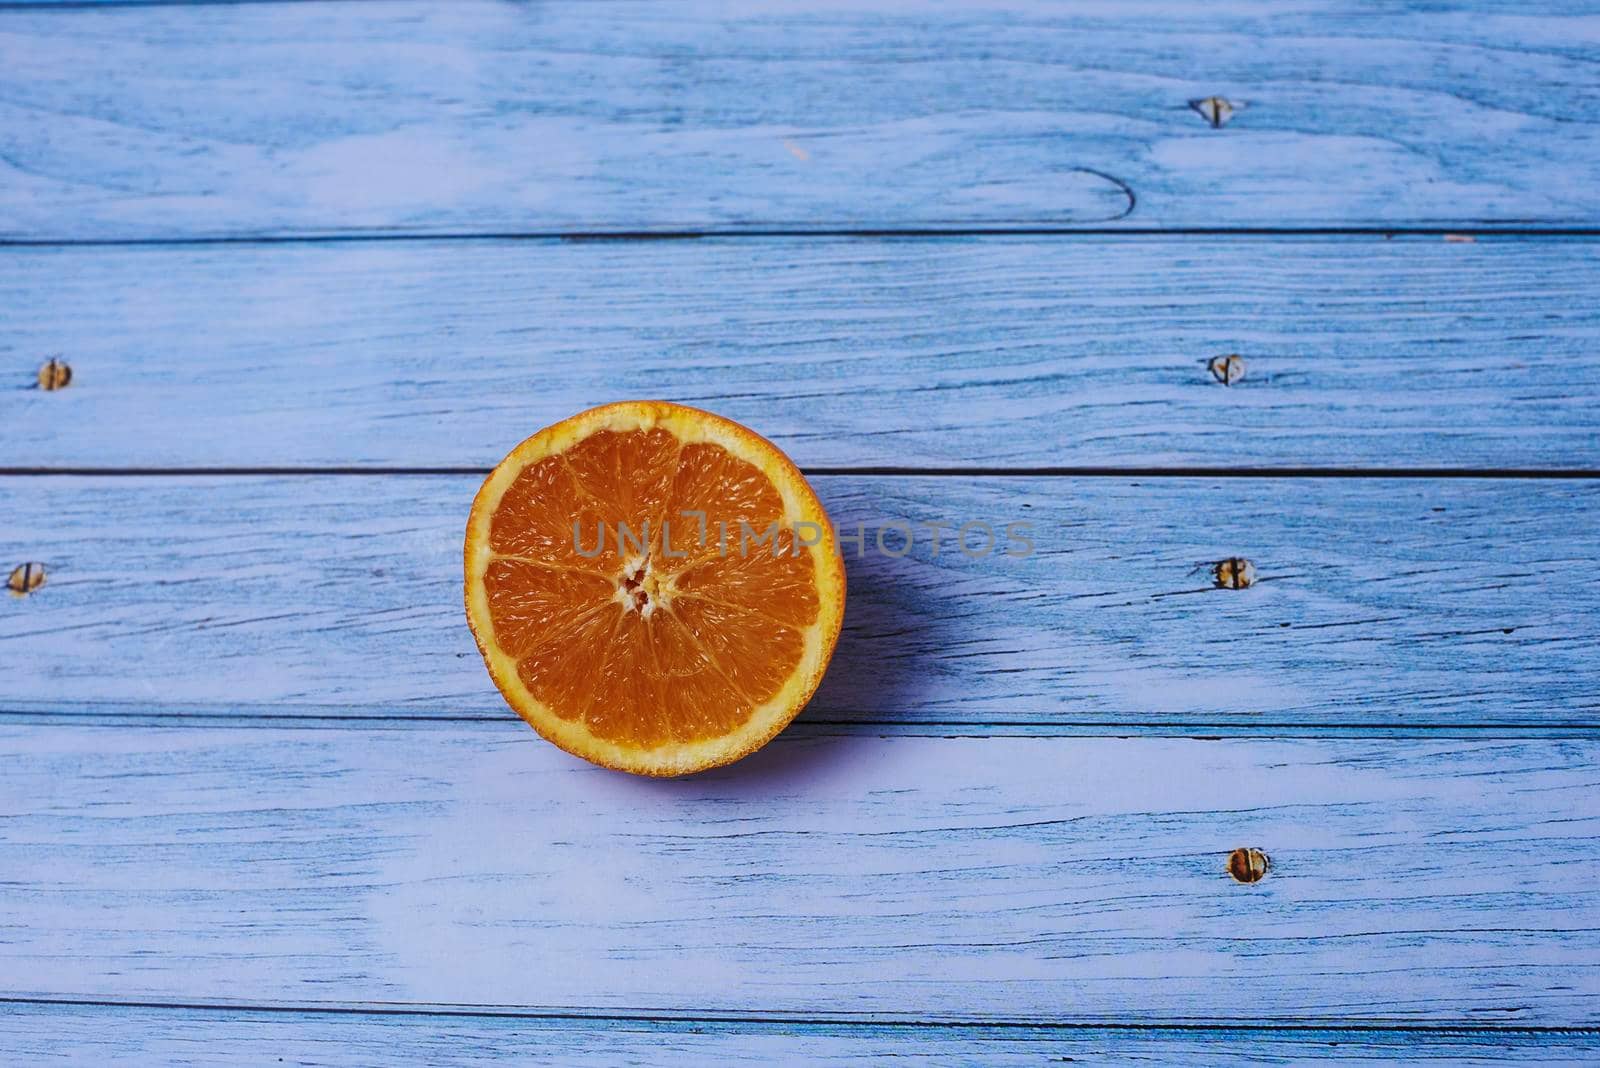 Half an orange on wooden floor by raul_ruiz